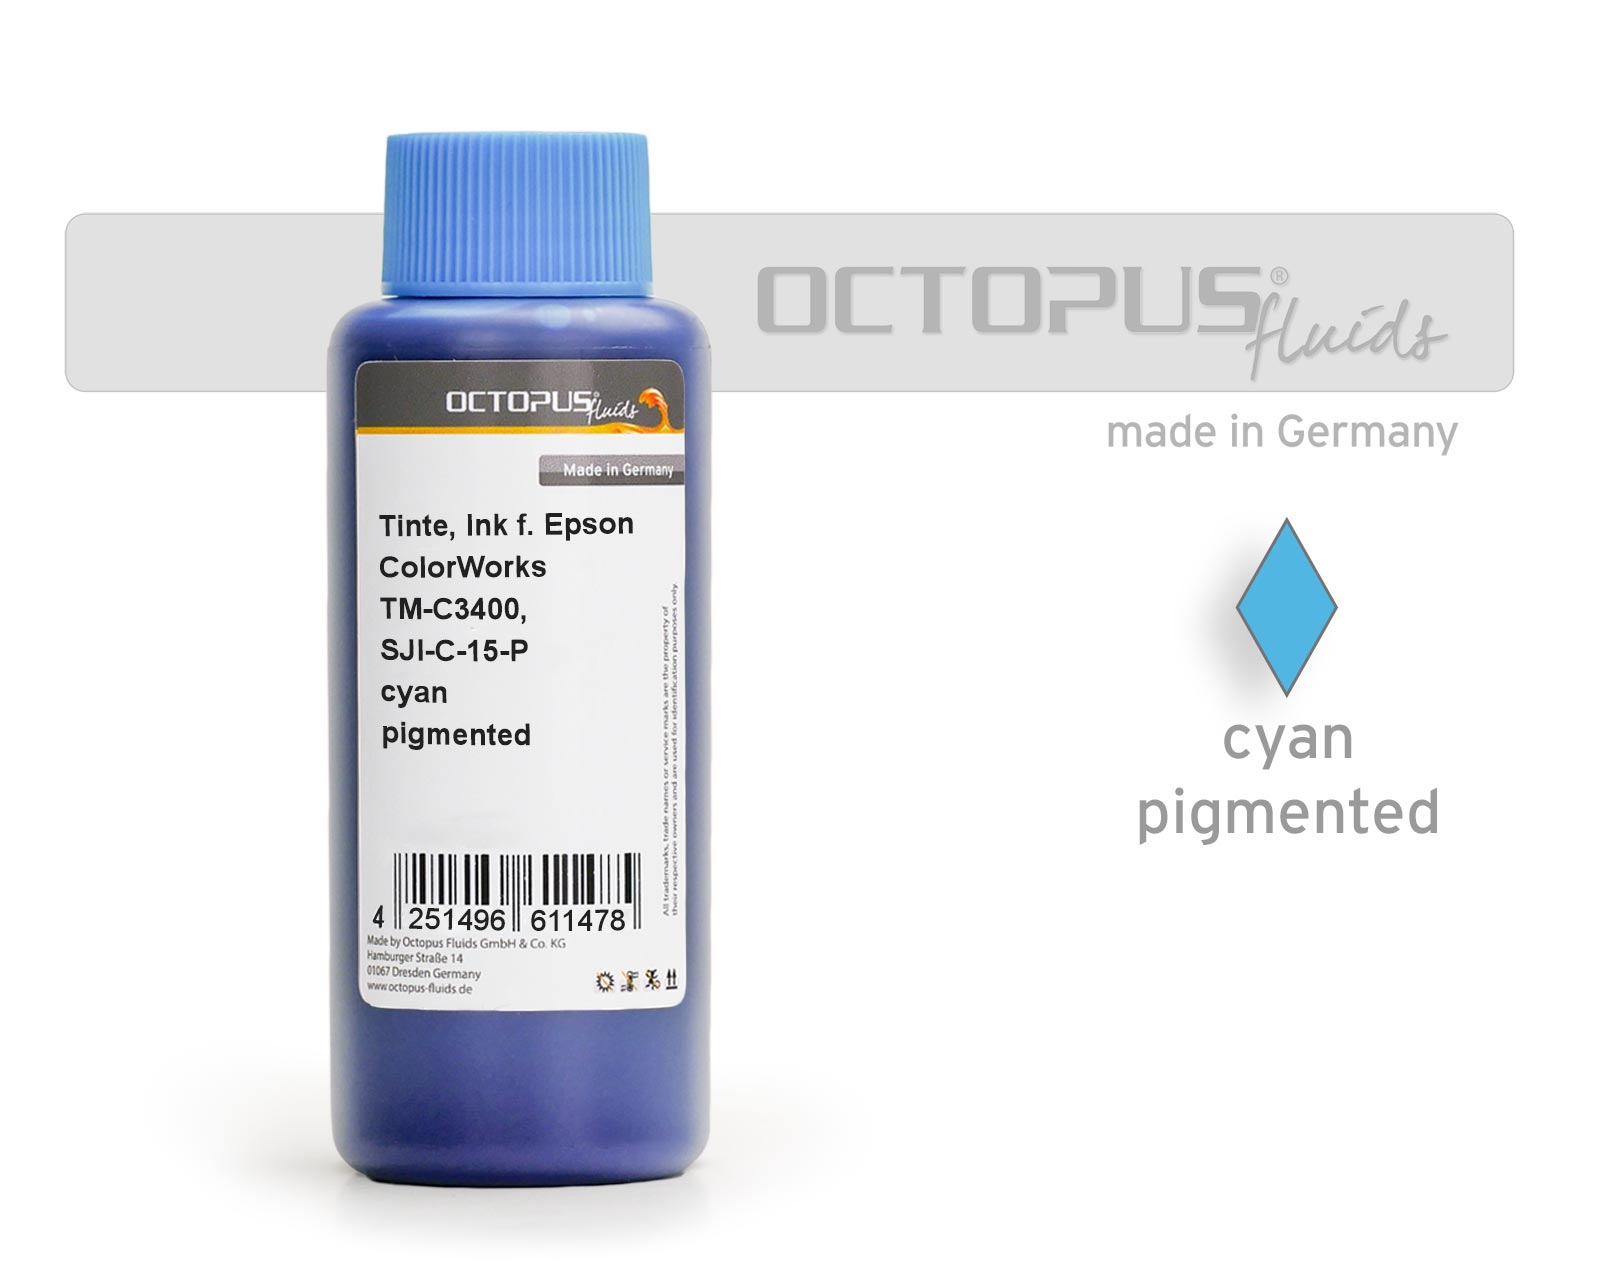 Refill ink for Epson ColorWorks TM-C3400, SJI-C-15-P cyan pigmented